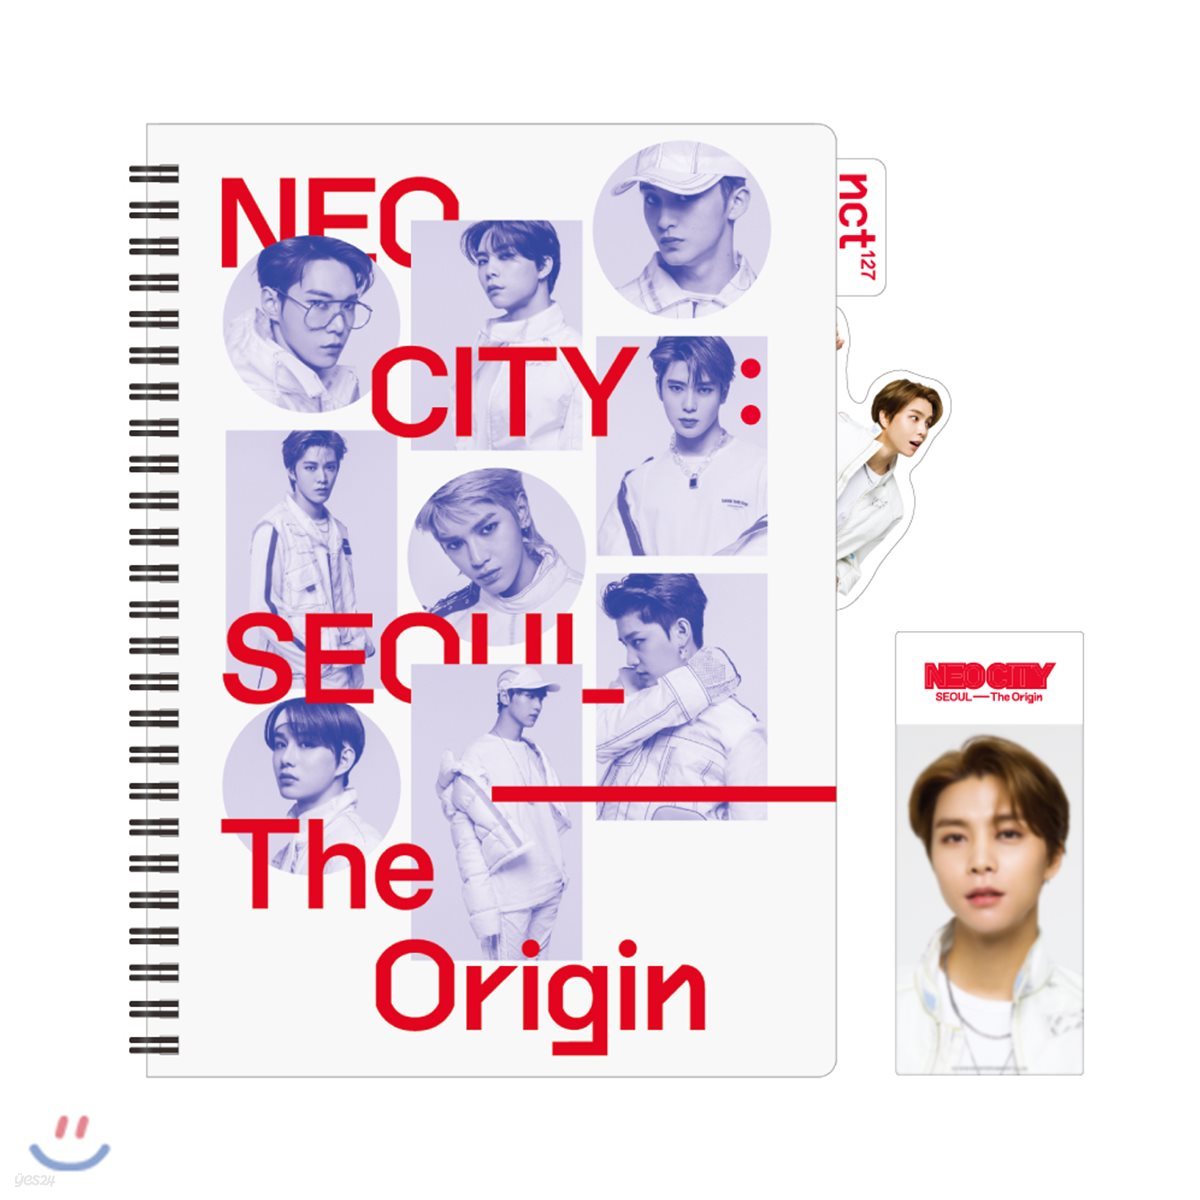 NCT 127 [NEO CITY : SEOUL - The Origin]- 인덱스노트+북마크 [쟈니]